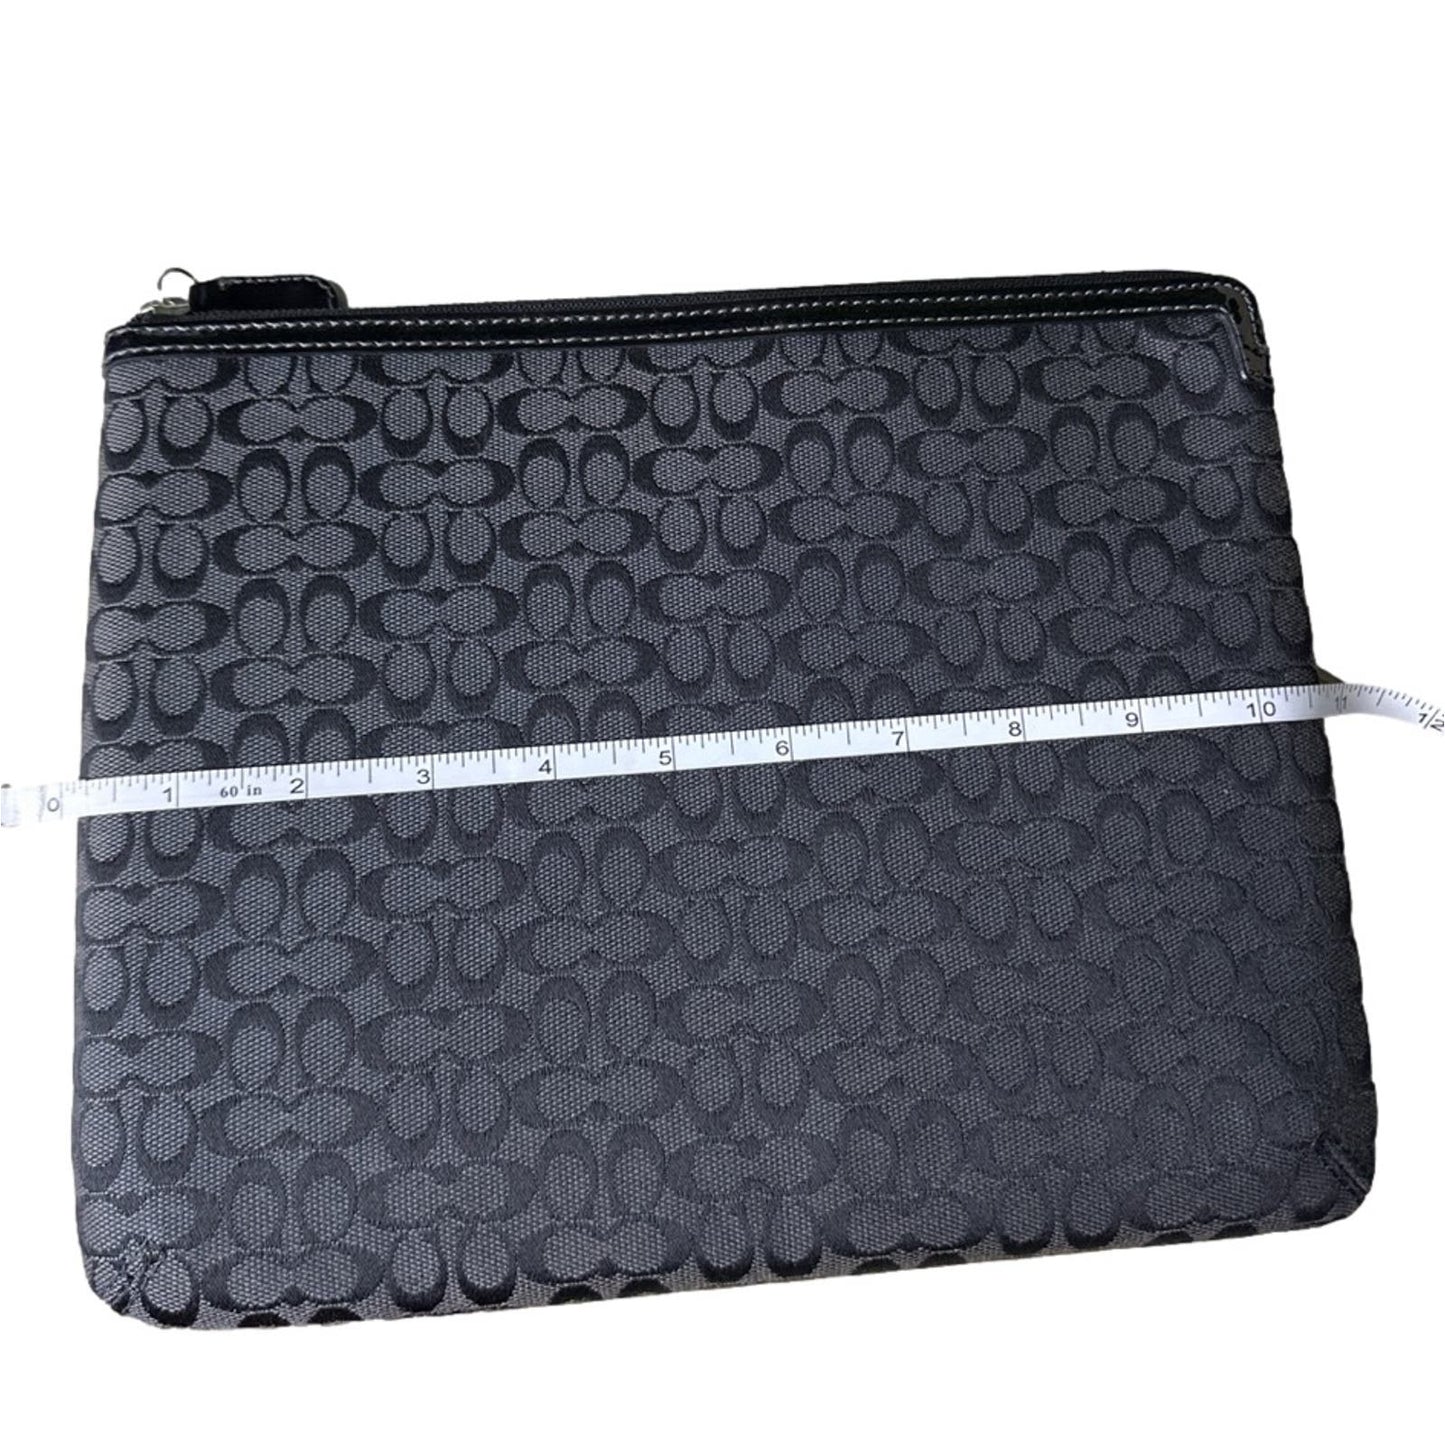 COACH Signature Black Canvas Tablet / ipad Case